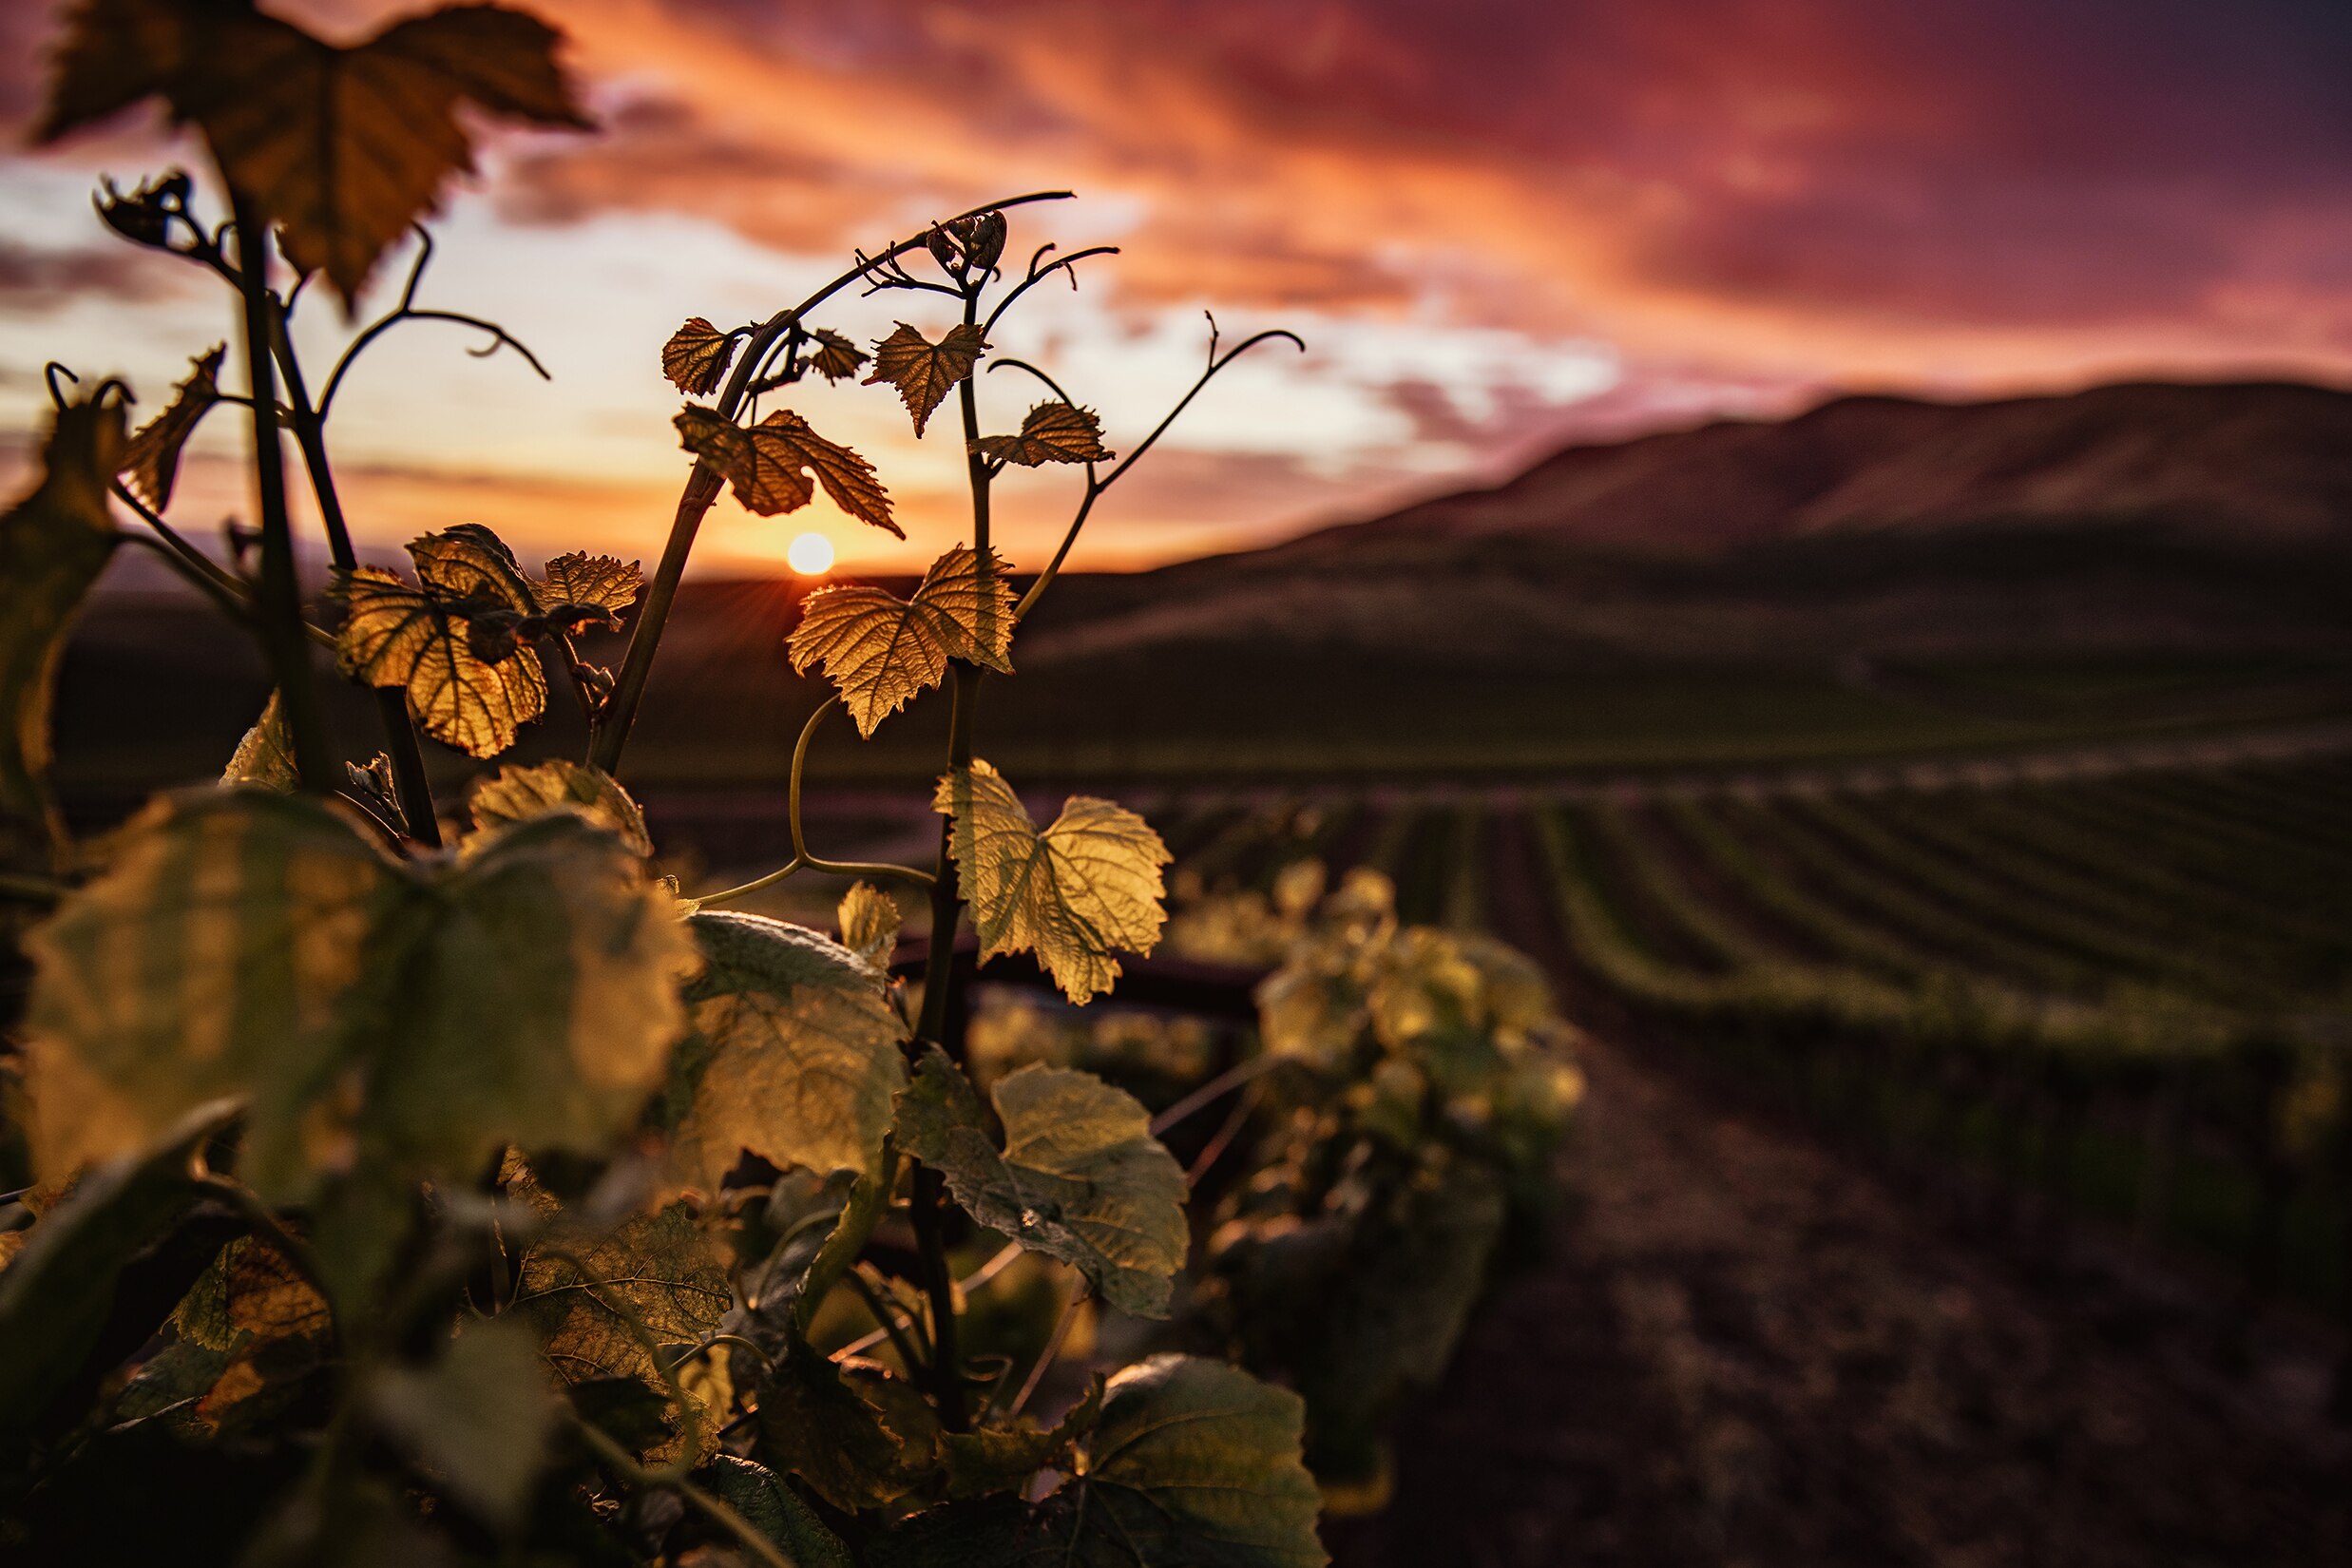 A sunset scene at the vineyard 